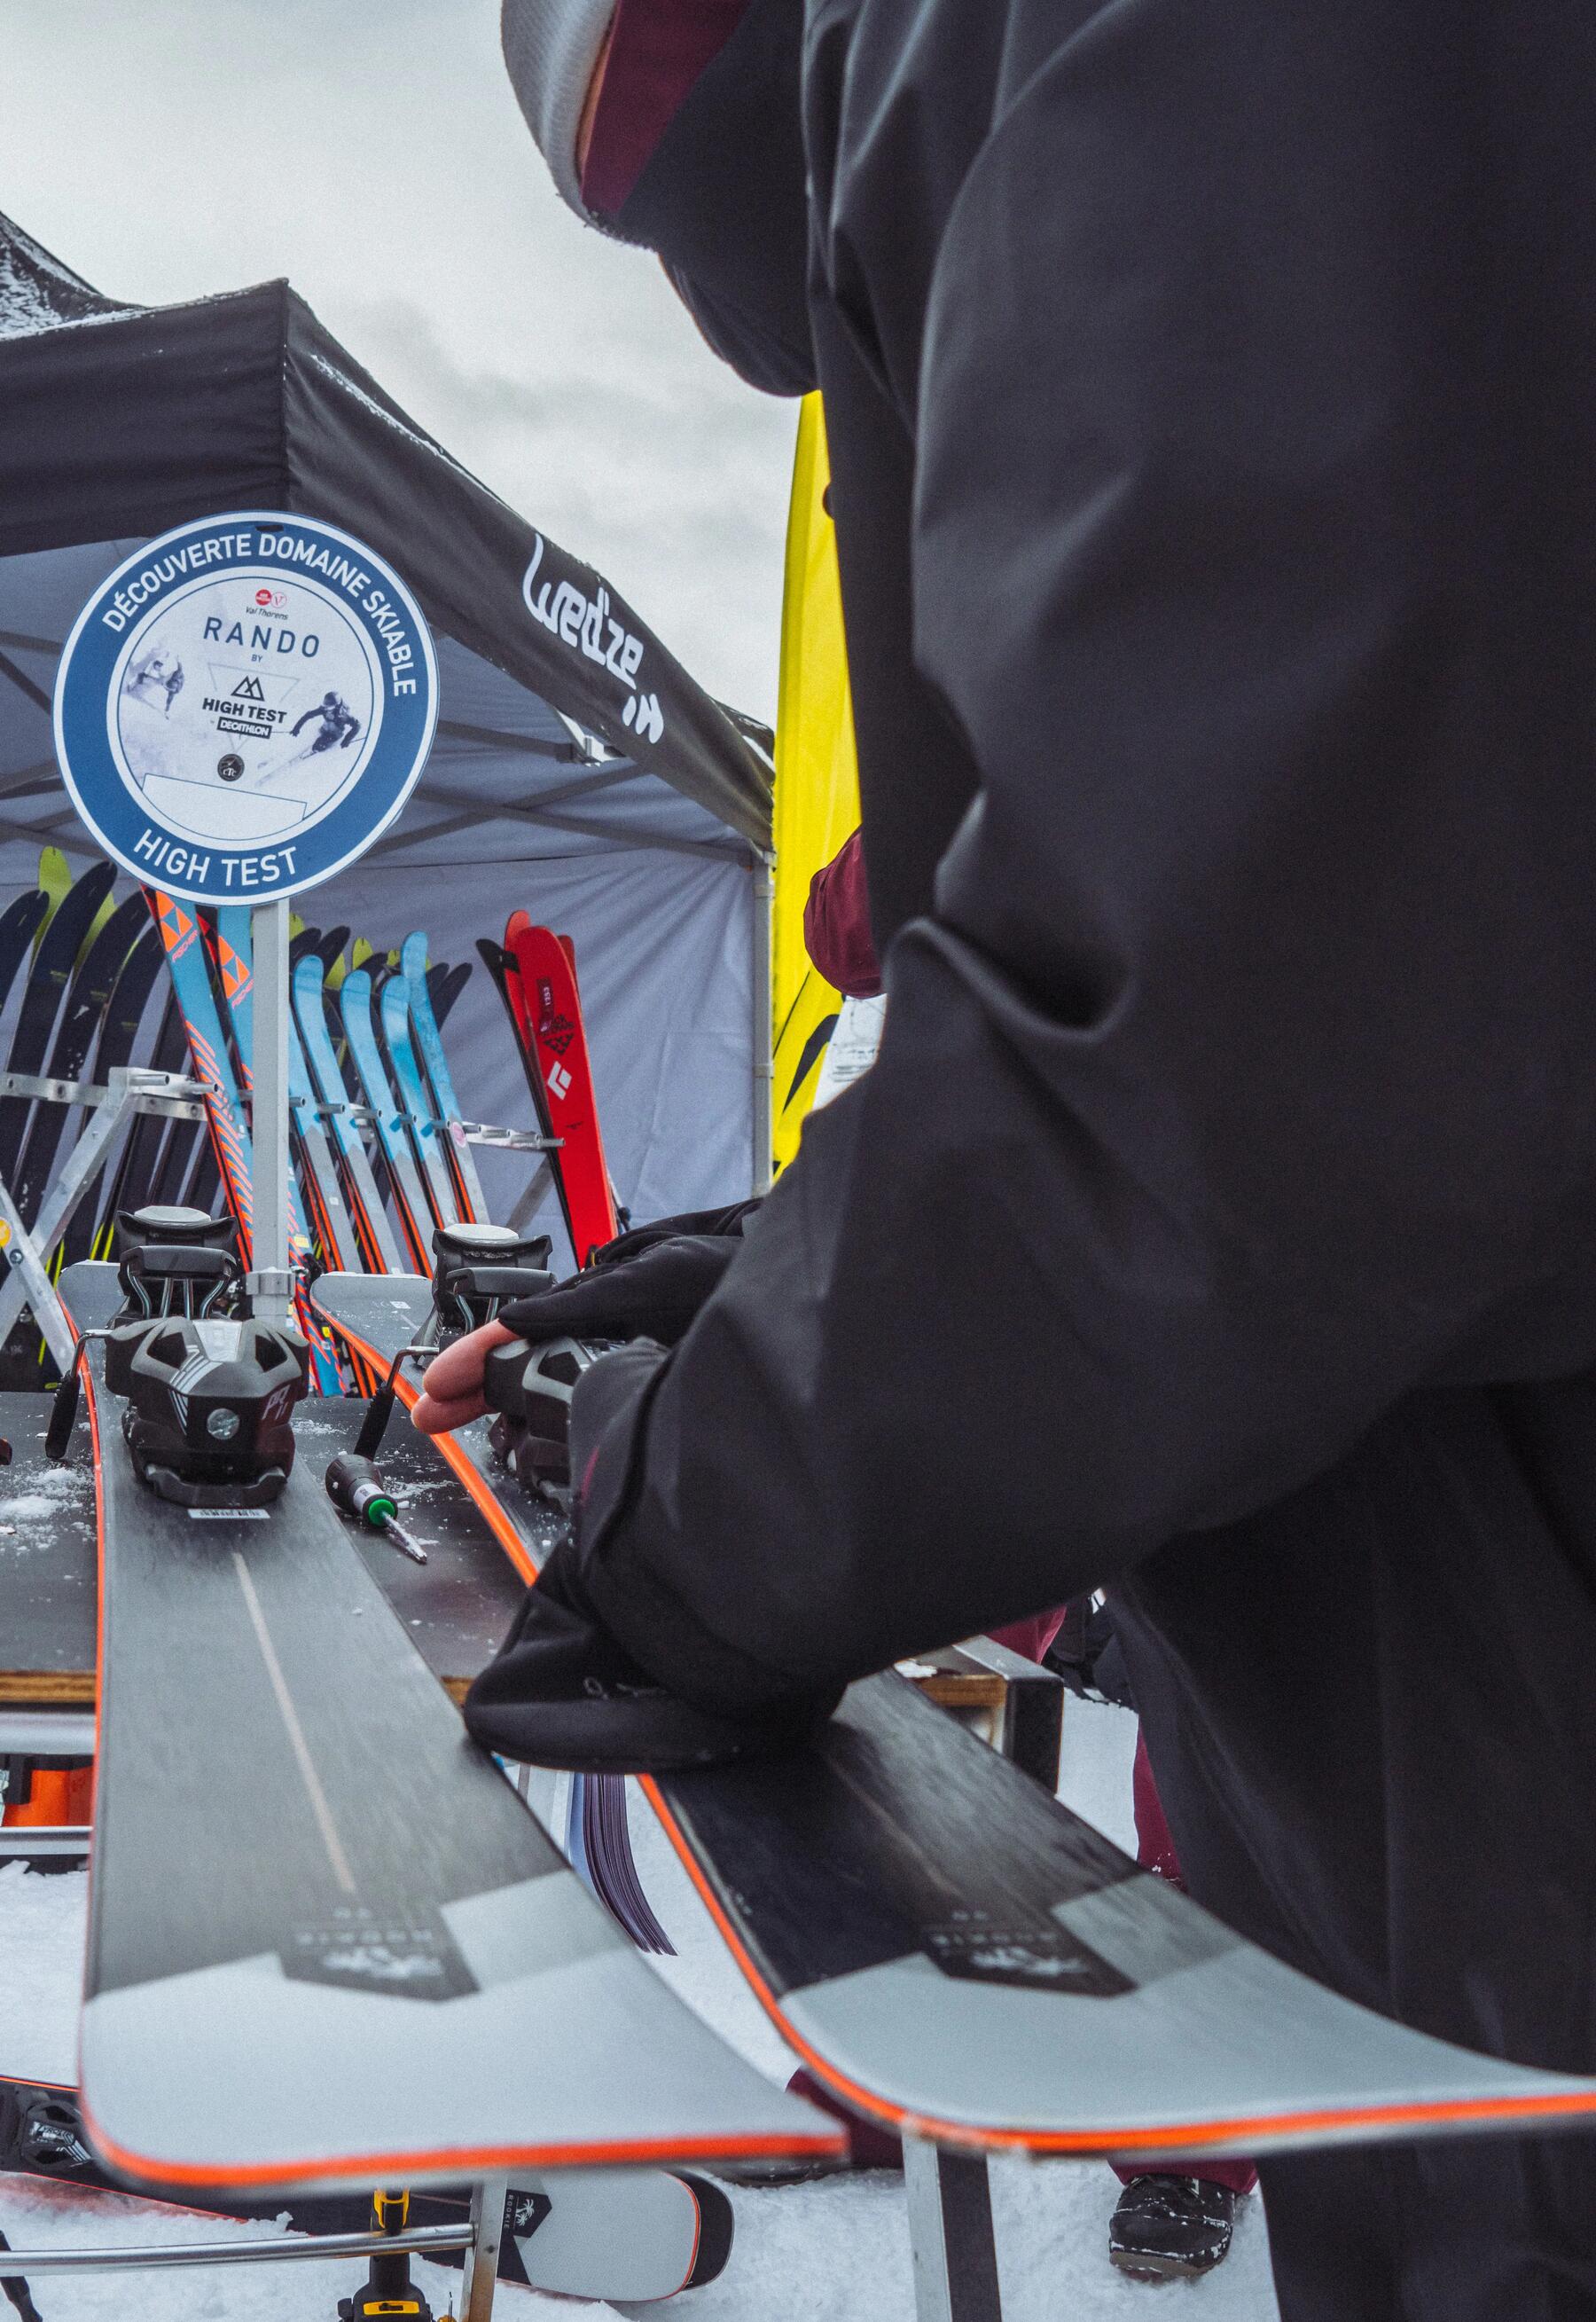 How do you adjust your ski bindings properly?